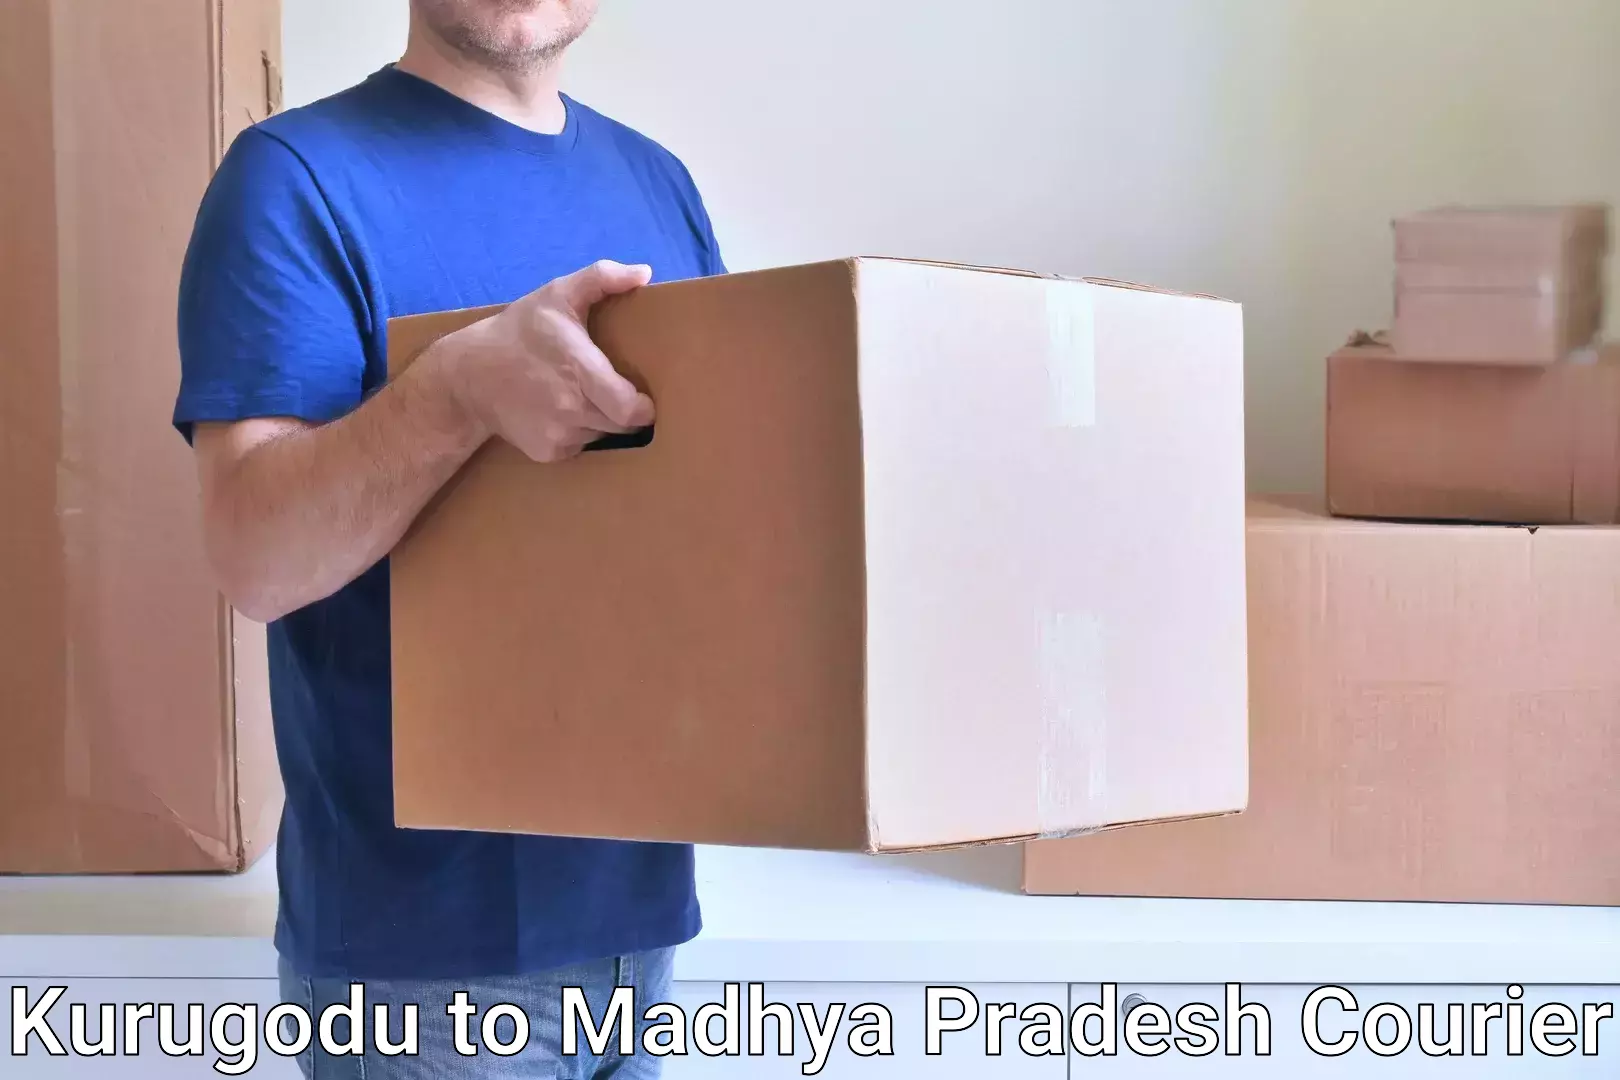 Speedy delivery service Kurugodu to Vidisha